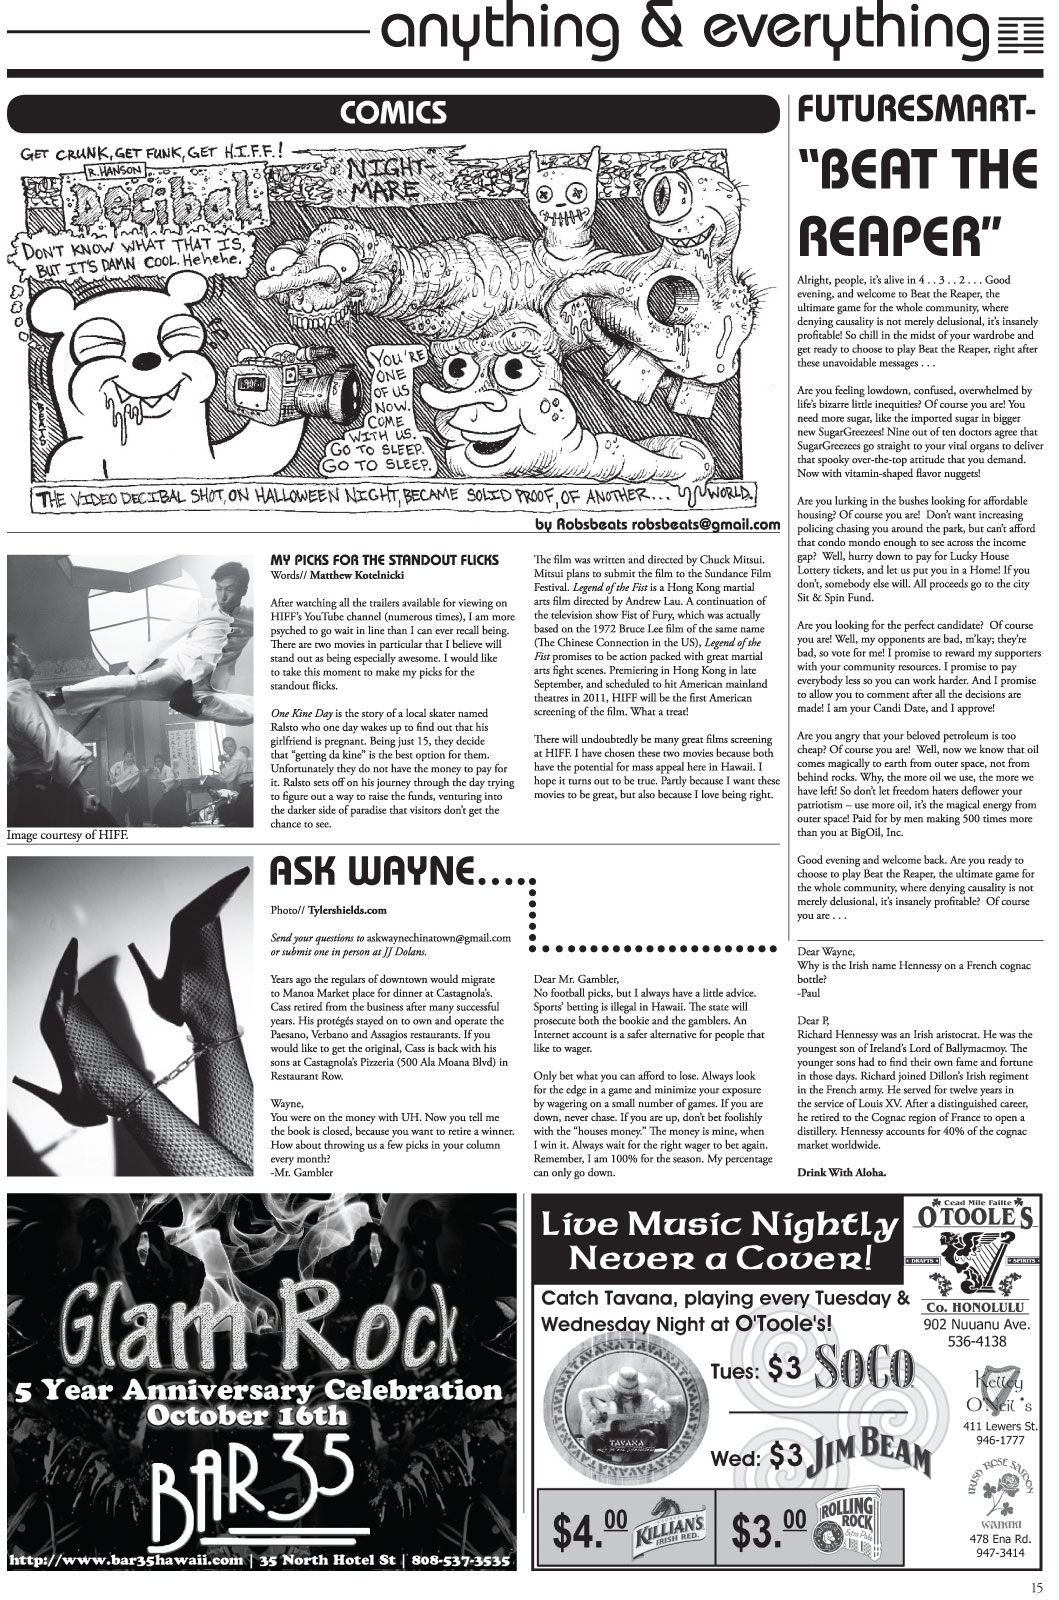 Chinatown Newspaper october 2010 15